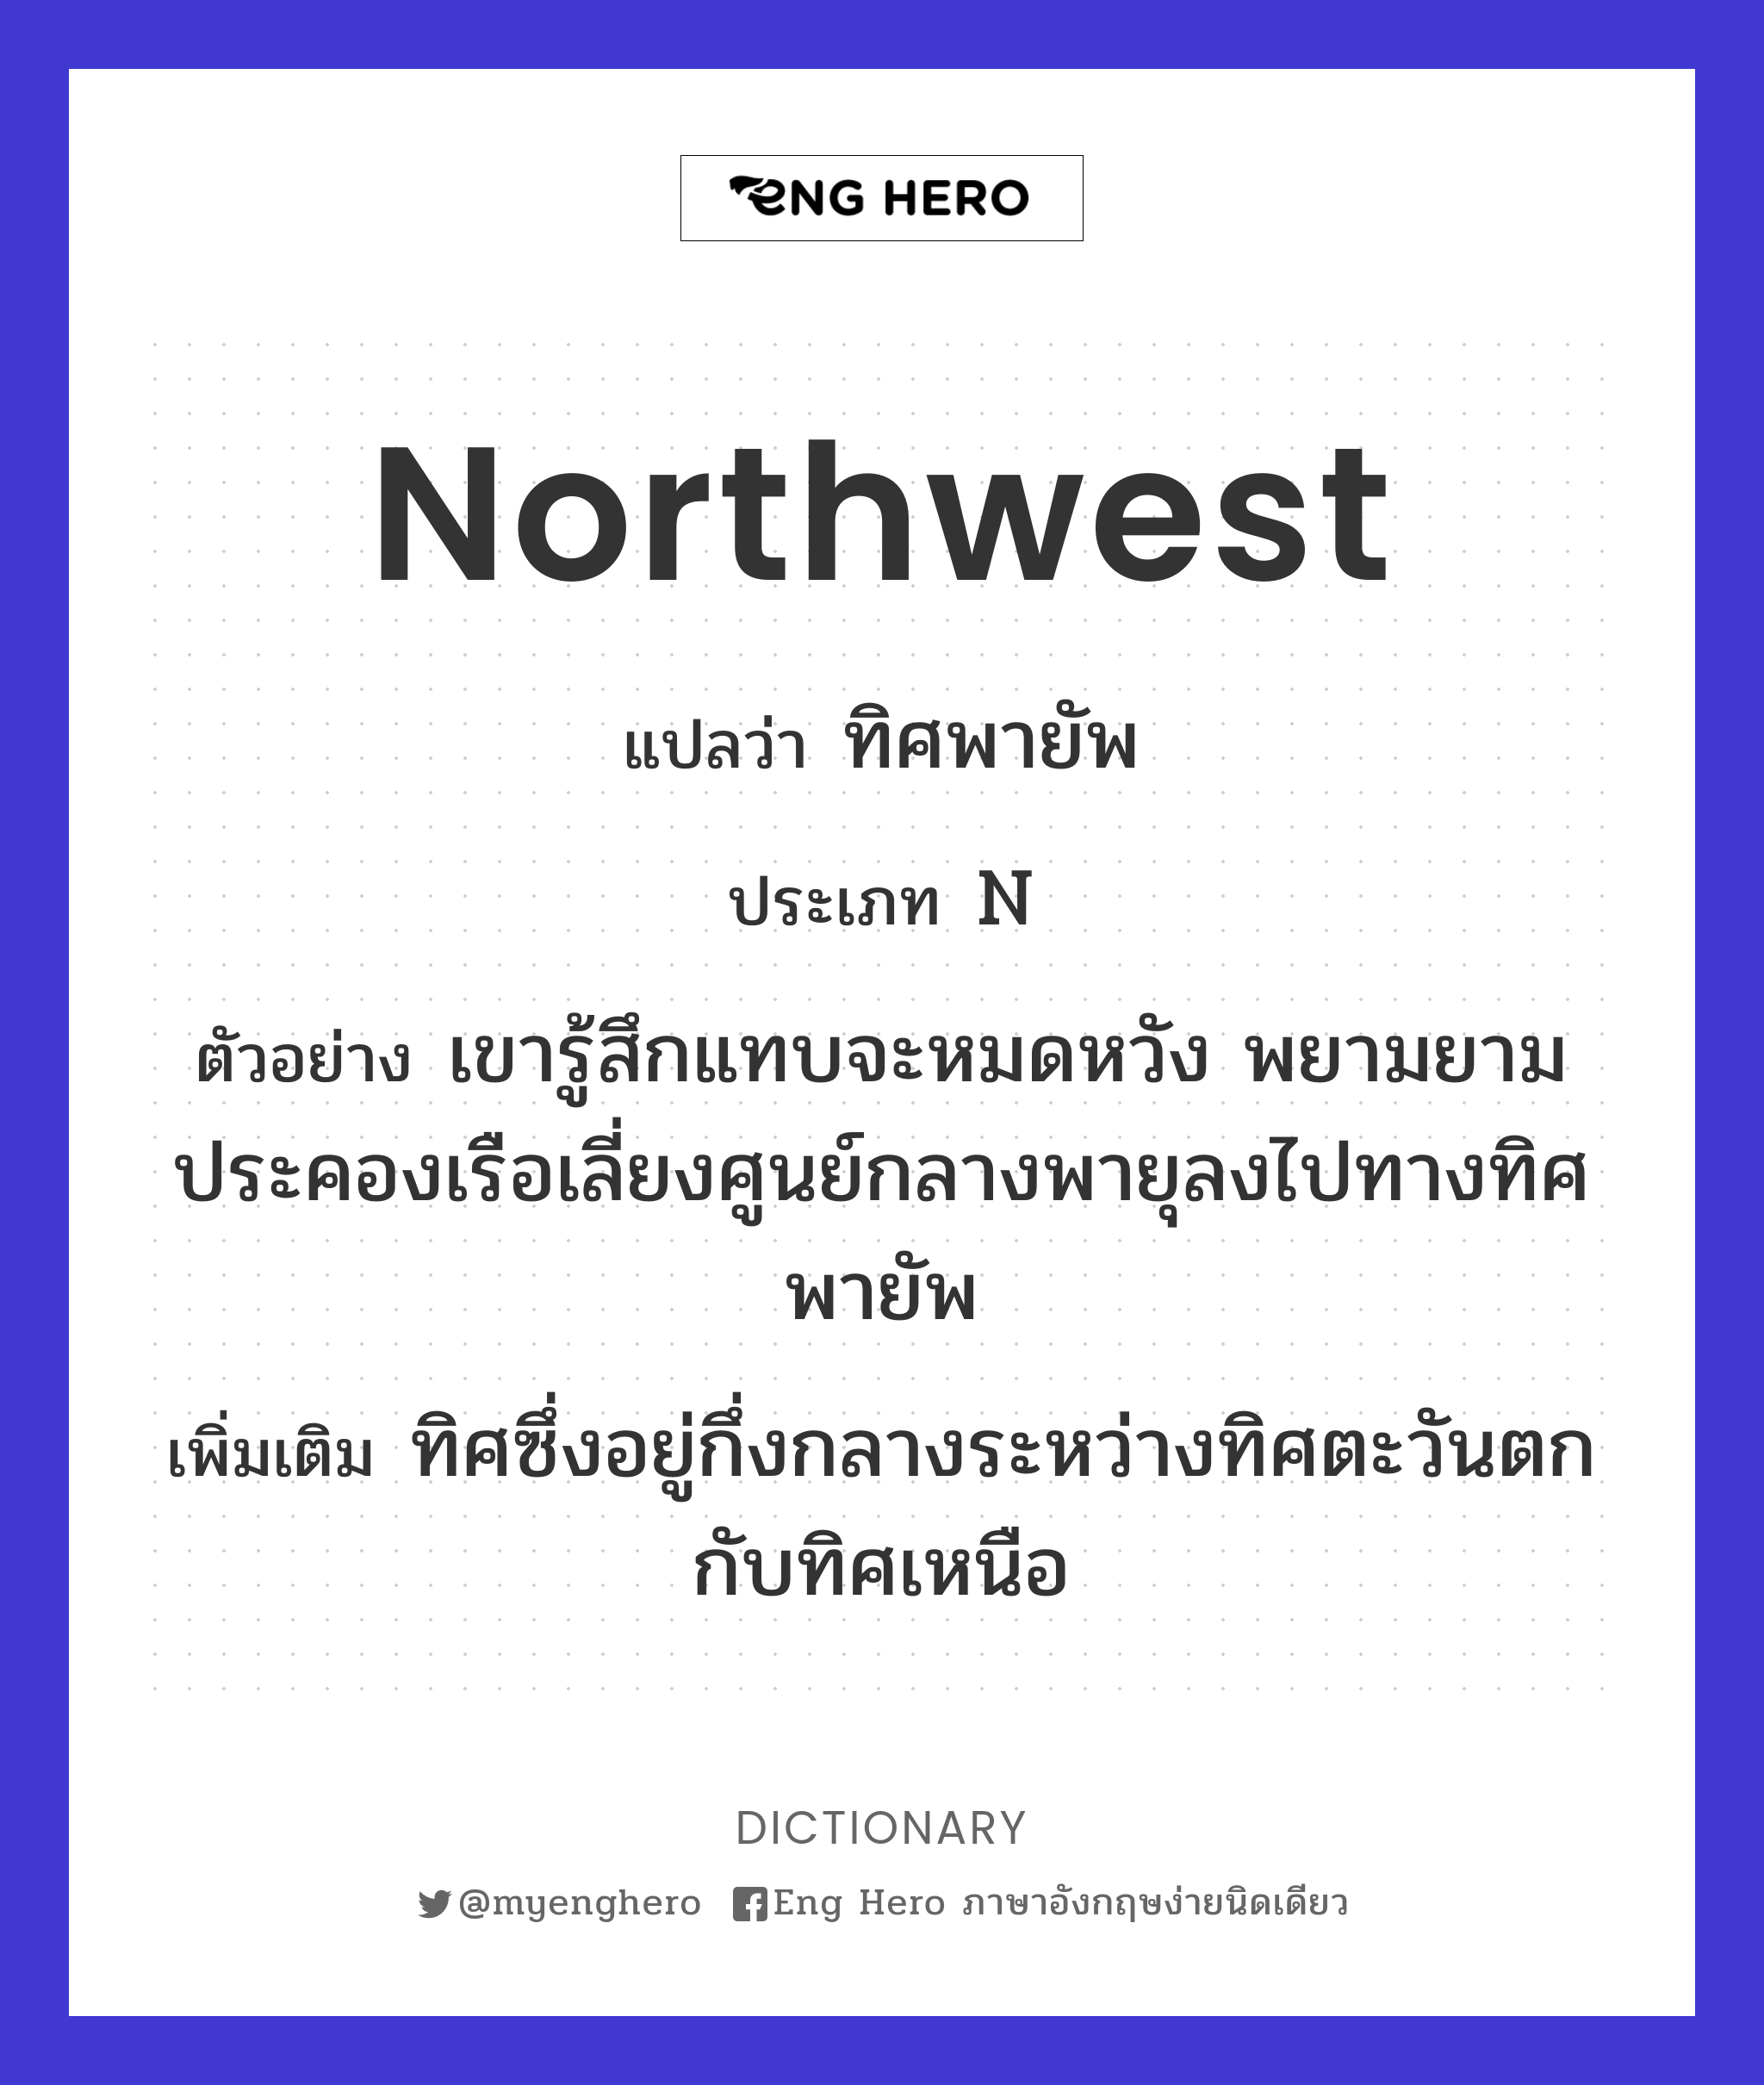 northwest